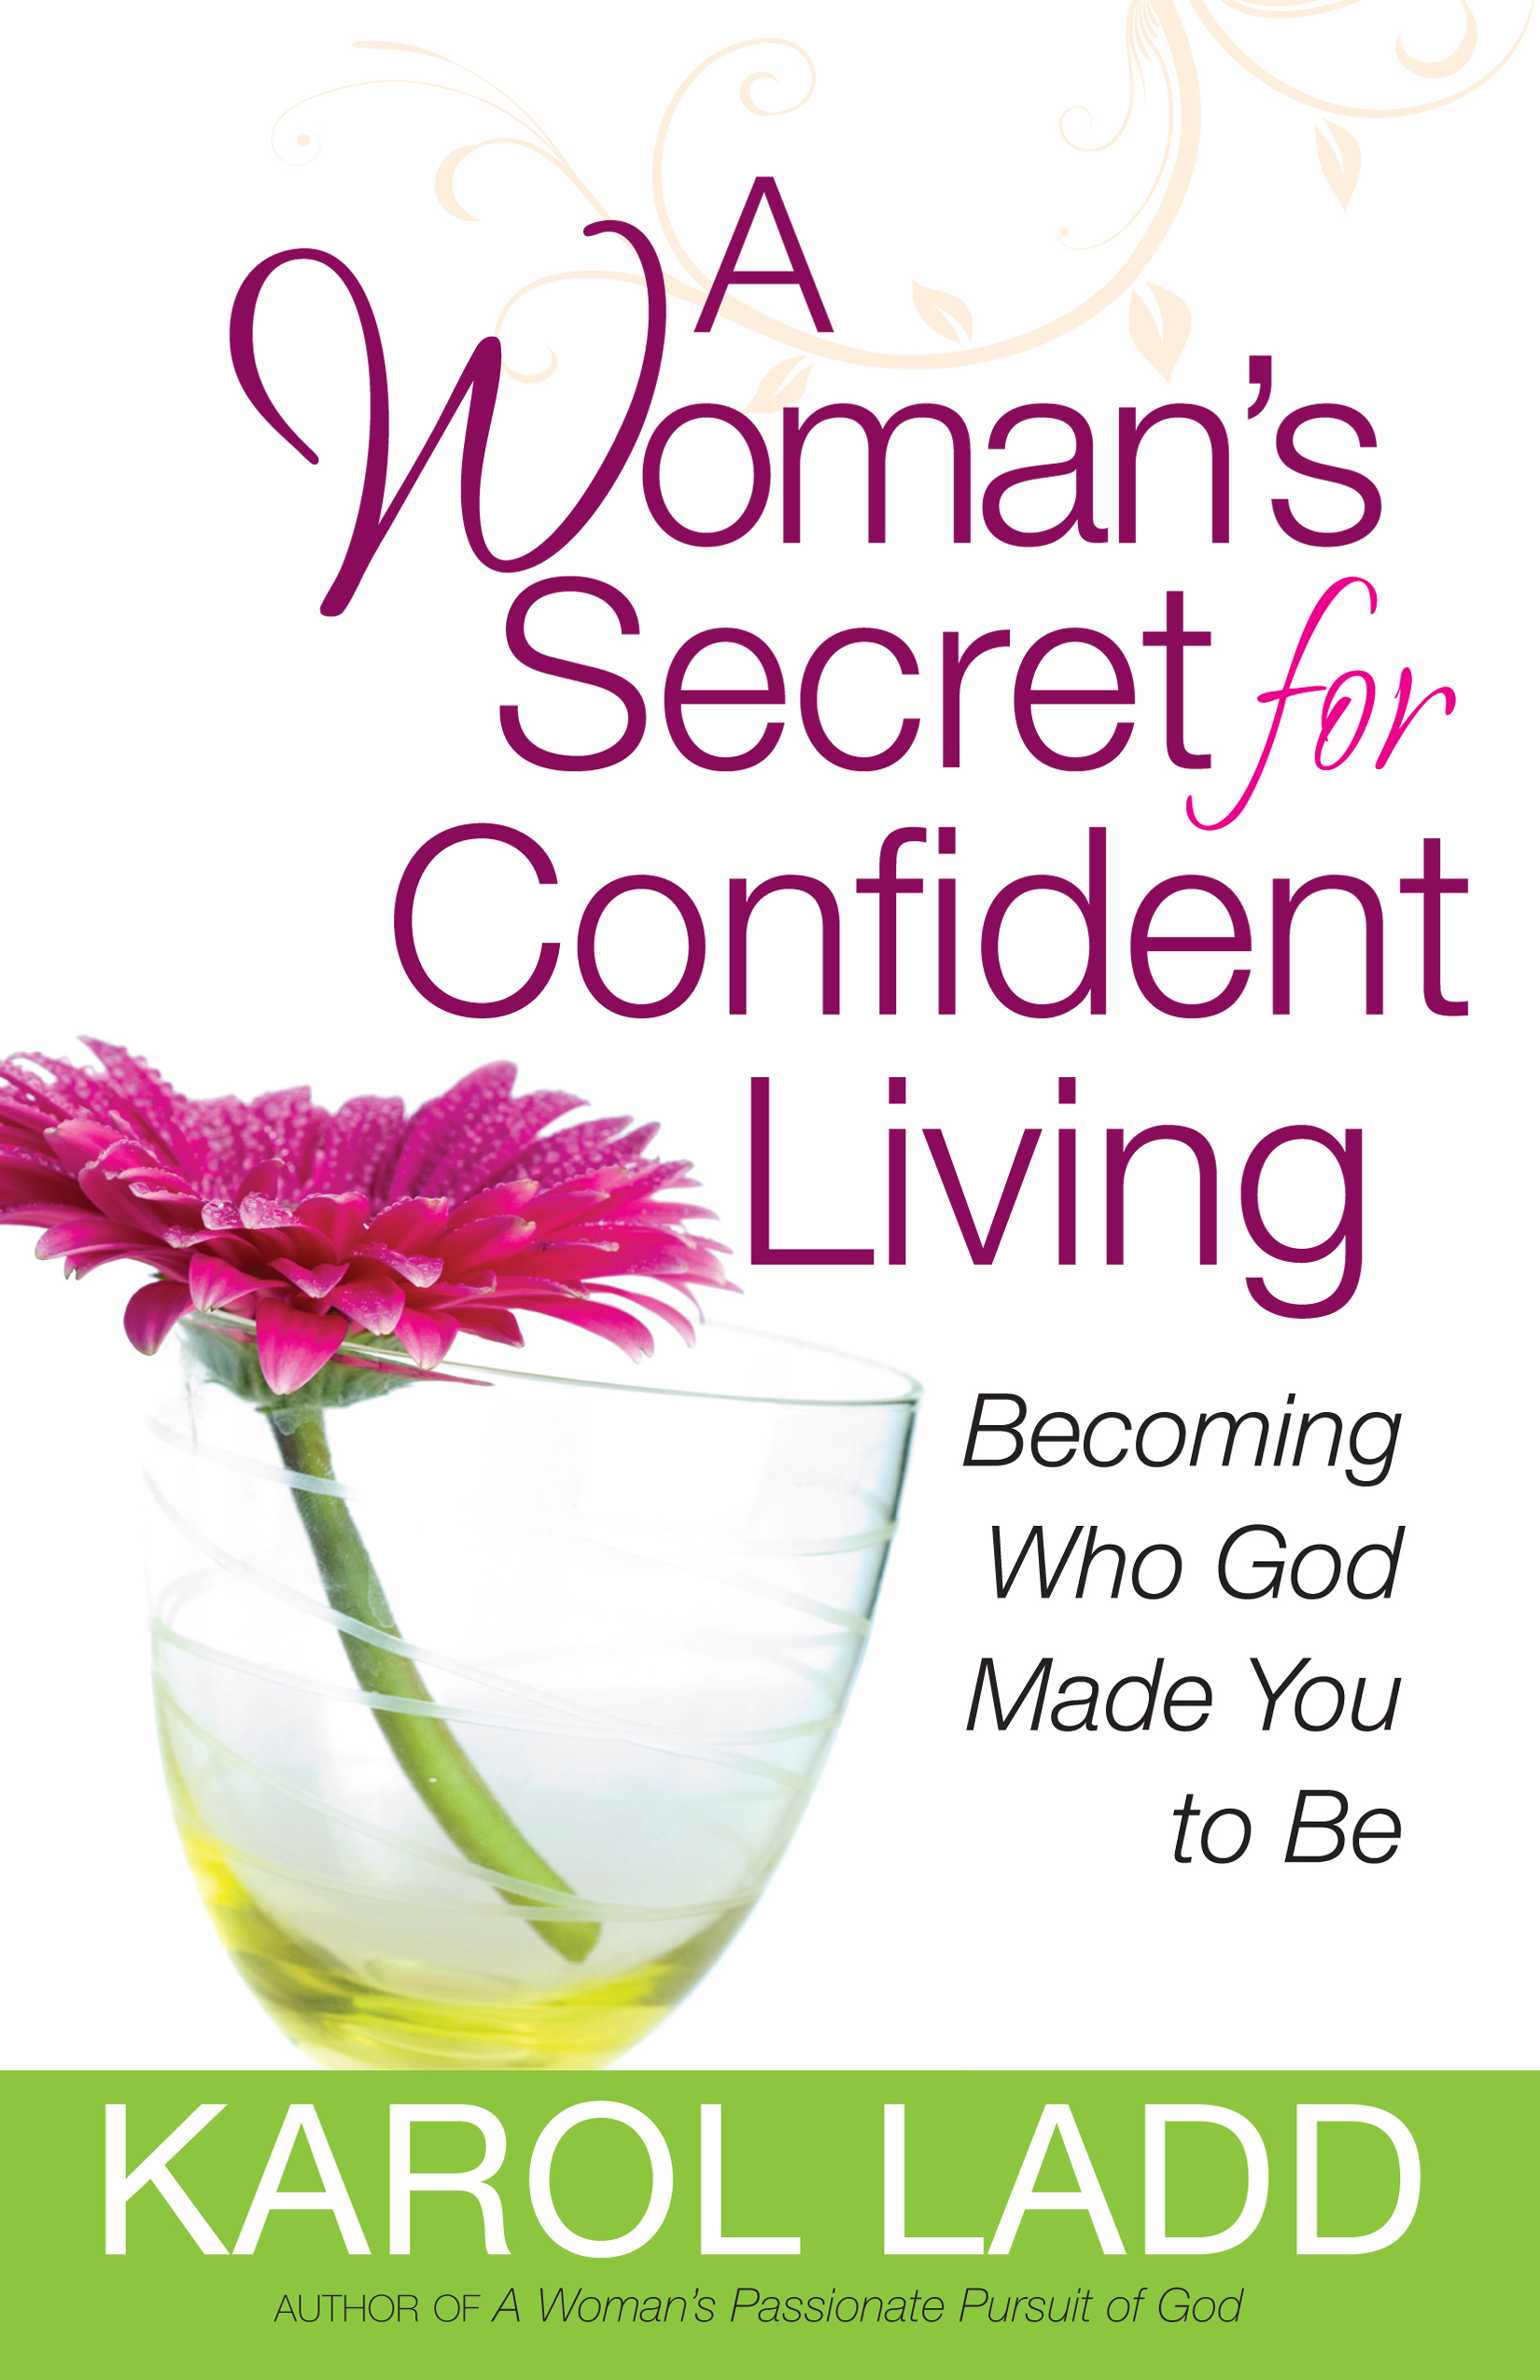 The Woman's Secret for Confident LivingHarvest House